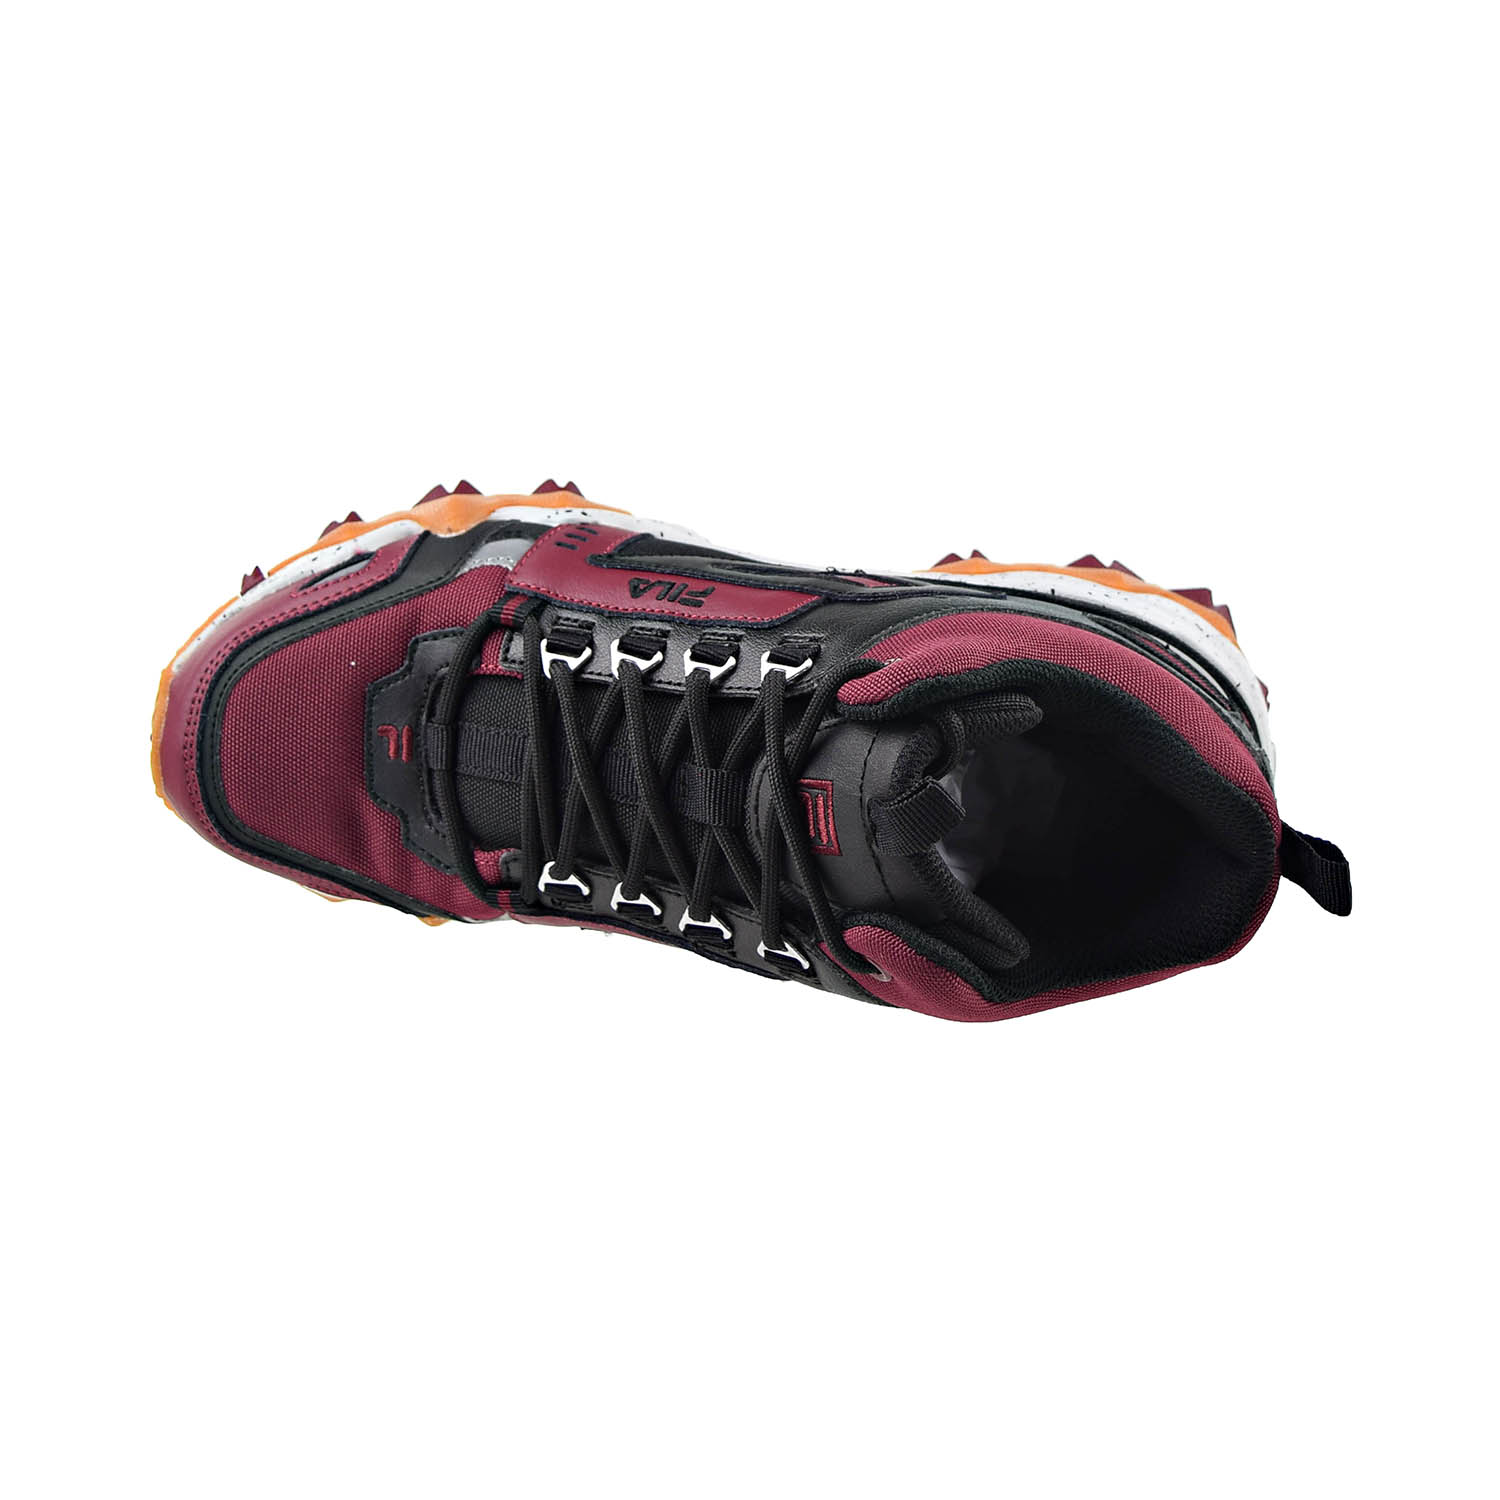 Fila Oakmont TR Mid Men's Shoes Tawny Port-Black-Glacier Gray 1jm01276-202